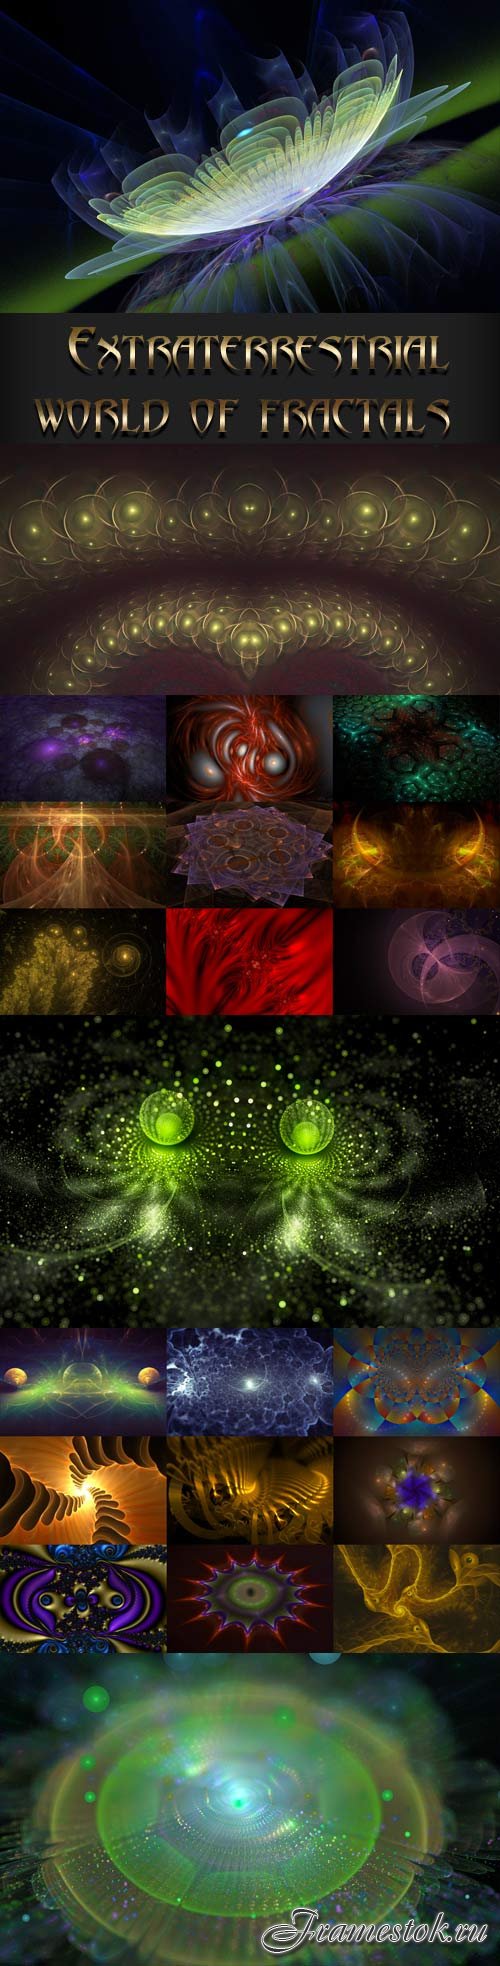 Extraterrestrial world of fractals - 2